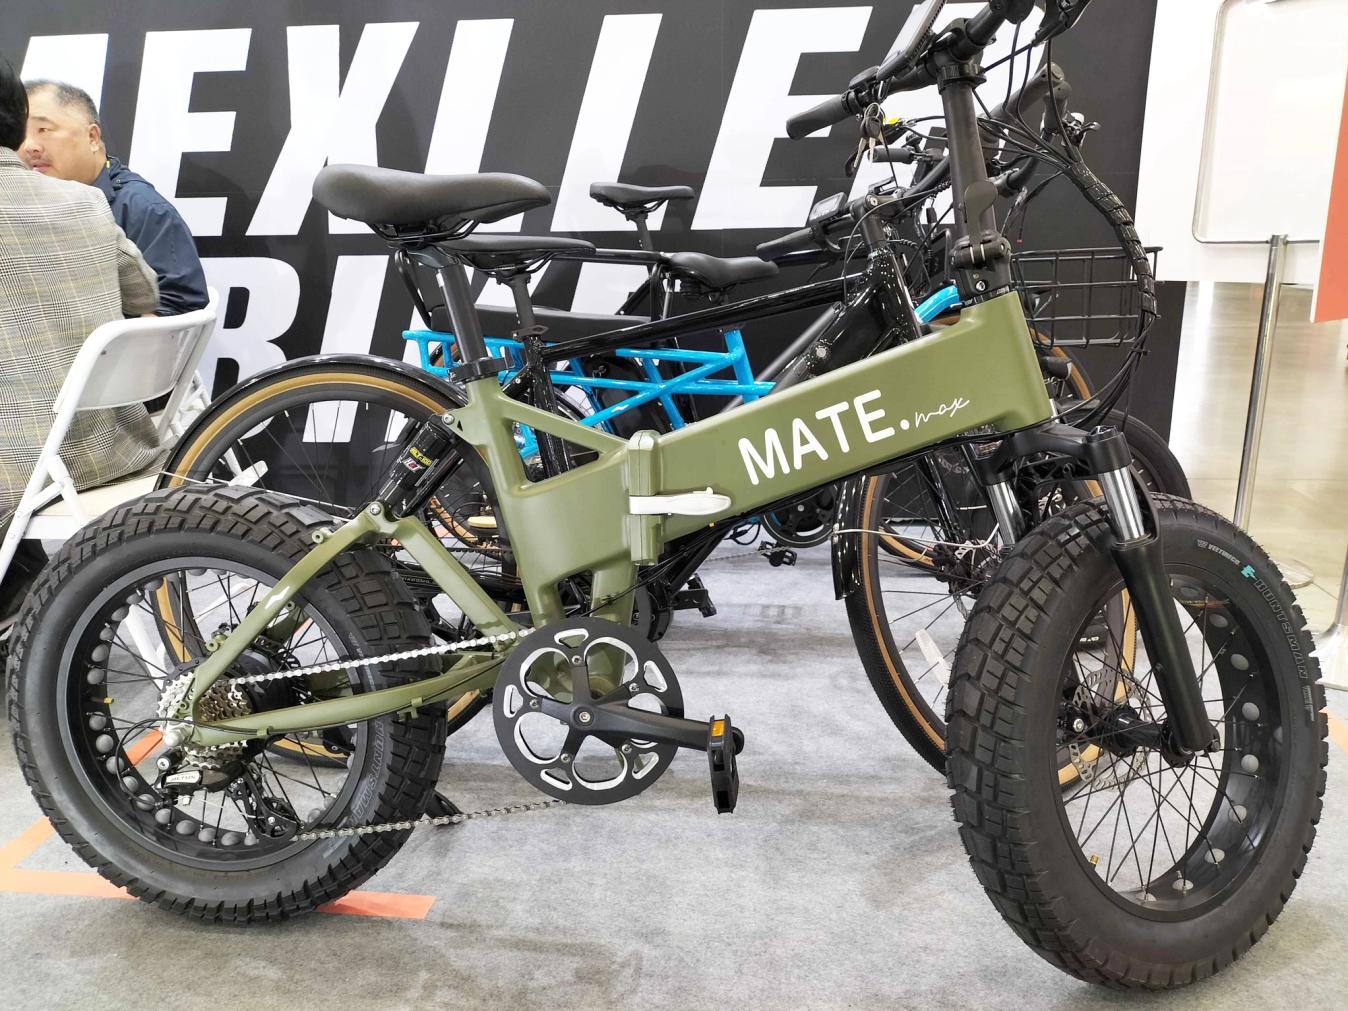 MATE has broken away from traditional folding bike designs